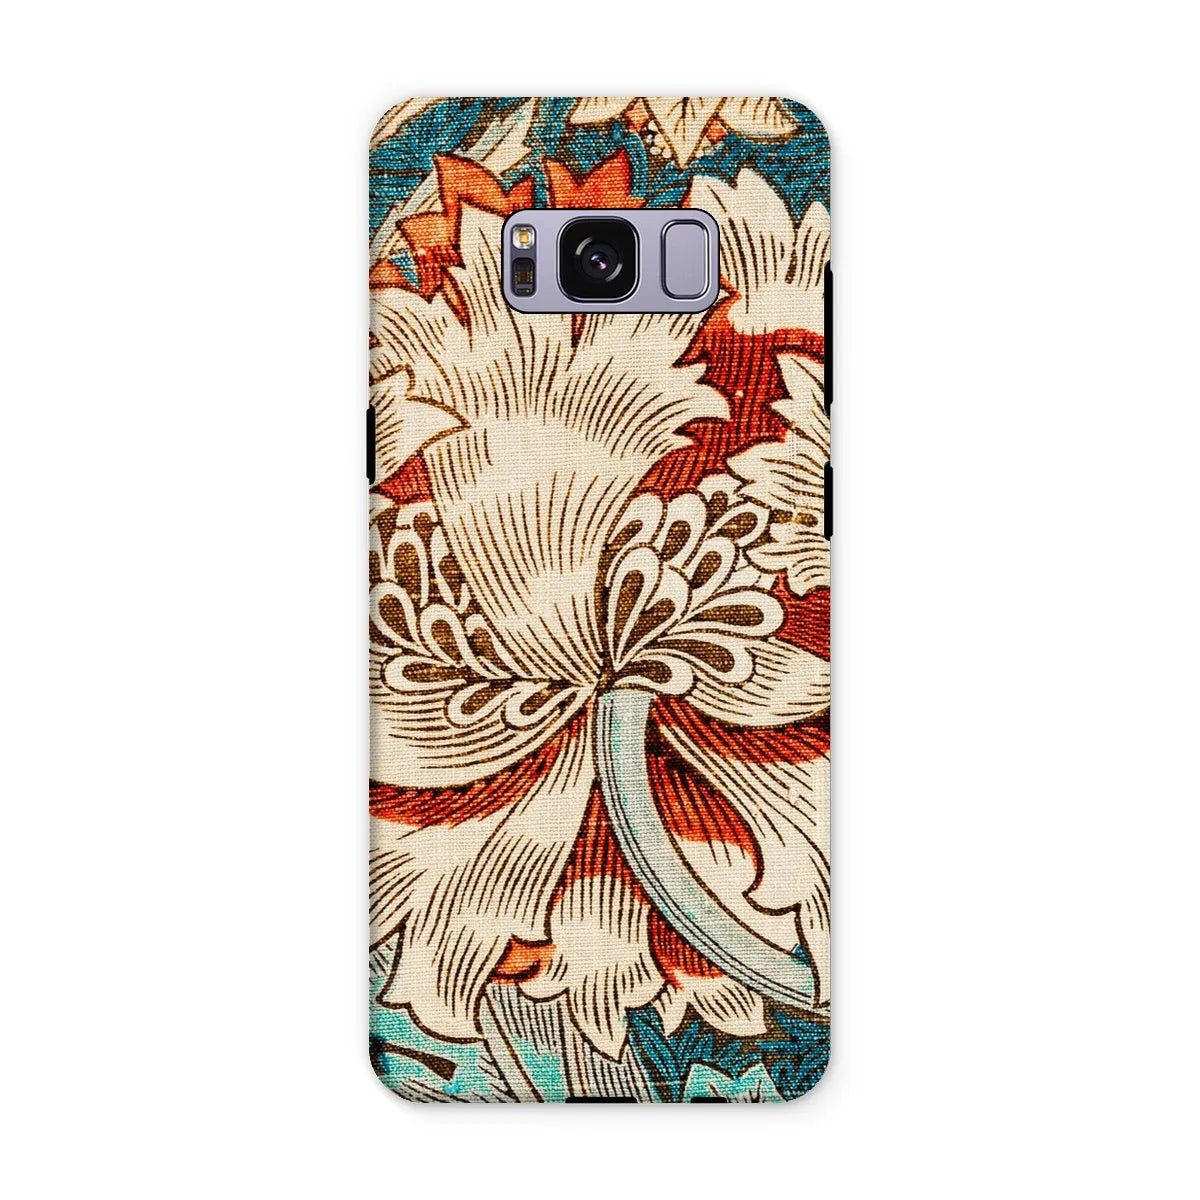 Honeysuckle Too By William Morris Phone Case - Samsung Galaxy S8 Plus / Matte - Mobile Phone Cases - Aesthetic Art